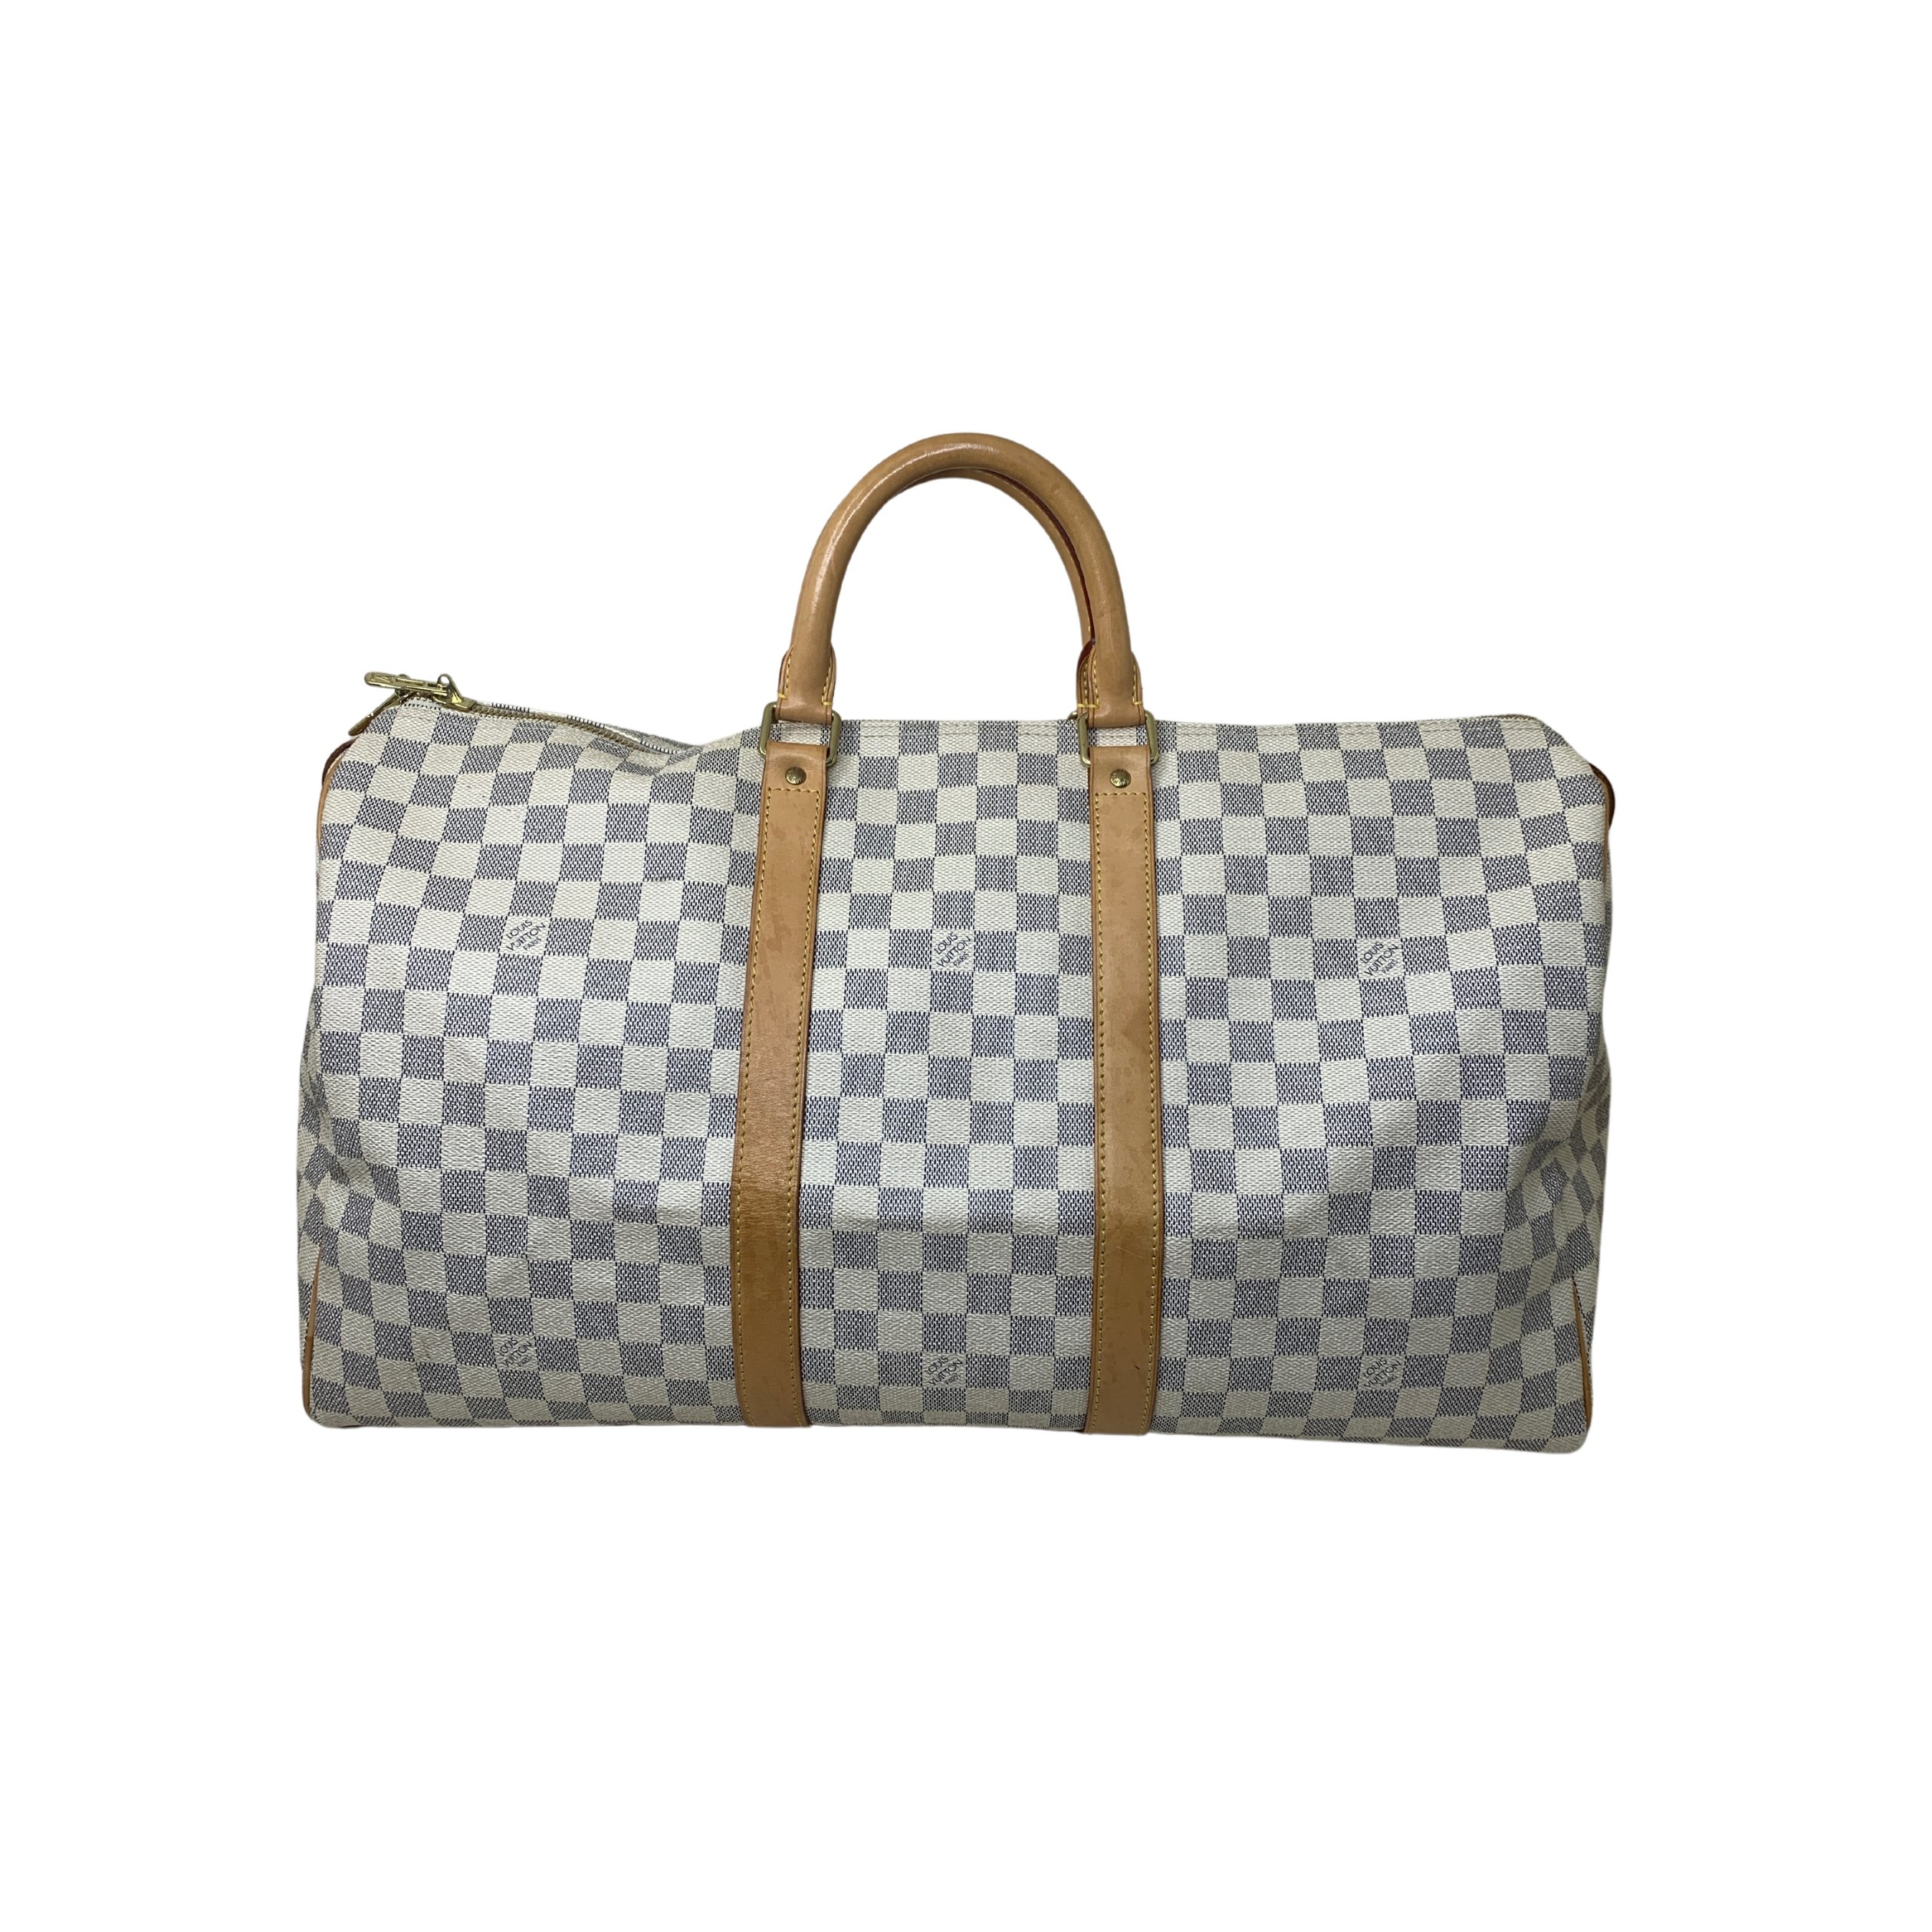 Louis Vuitton Discontinued Damier Azur Keepall 50 Duffle Bag 451lvs62